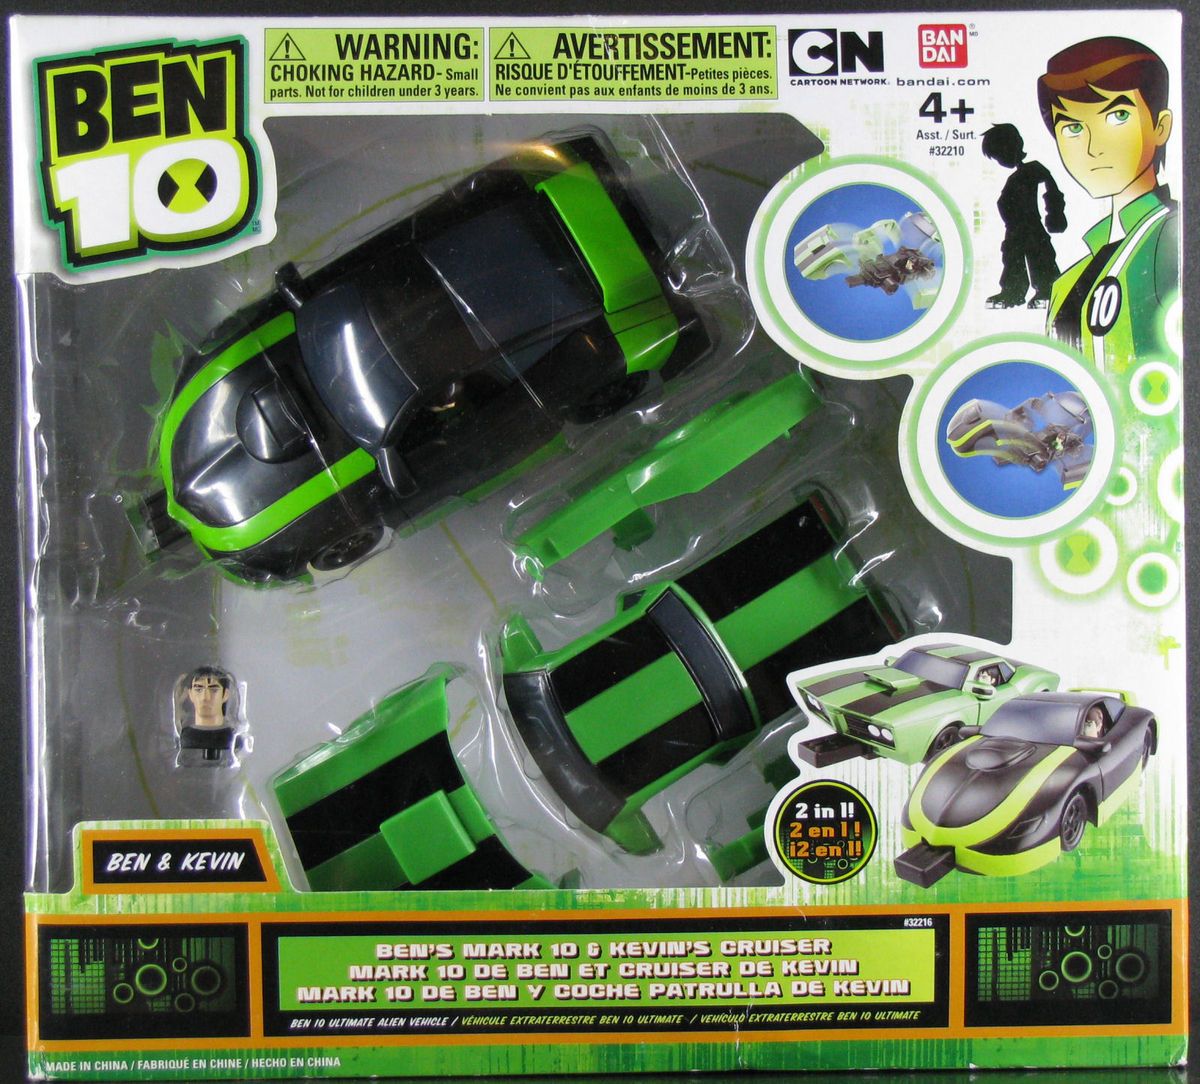 Ben 10 2 in 1 Car Bens Mark 10 Kevins Cruiser Ultimate Alien Vehicle.